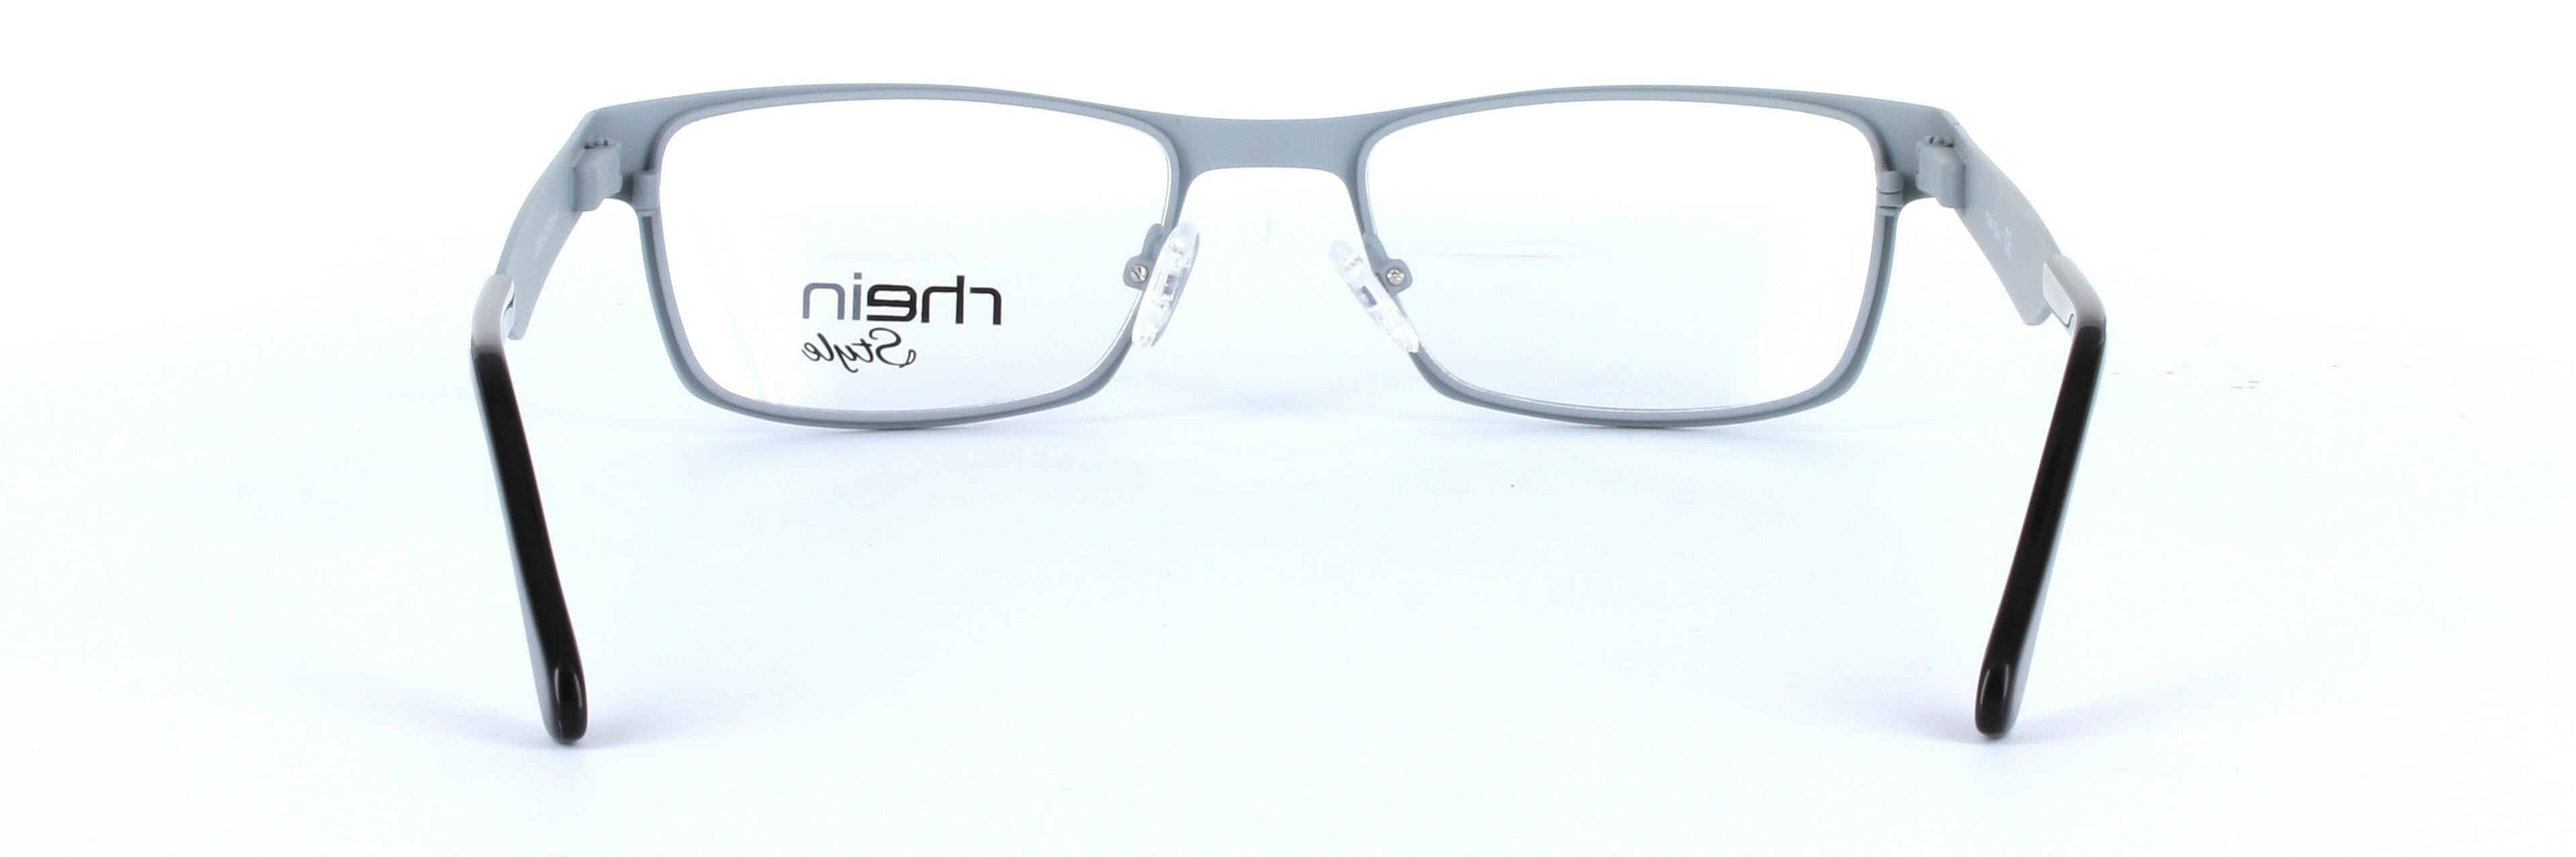 Ambleside Black and Silver Full Rim Rectangular Metal Glasses - Image View 3